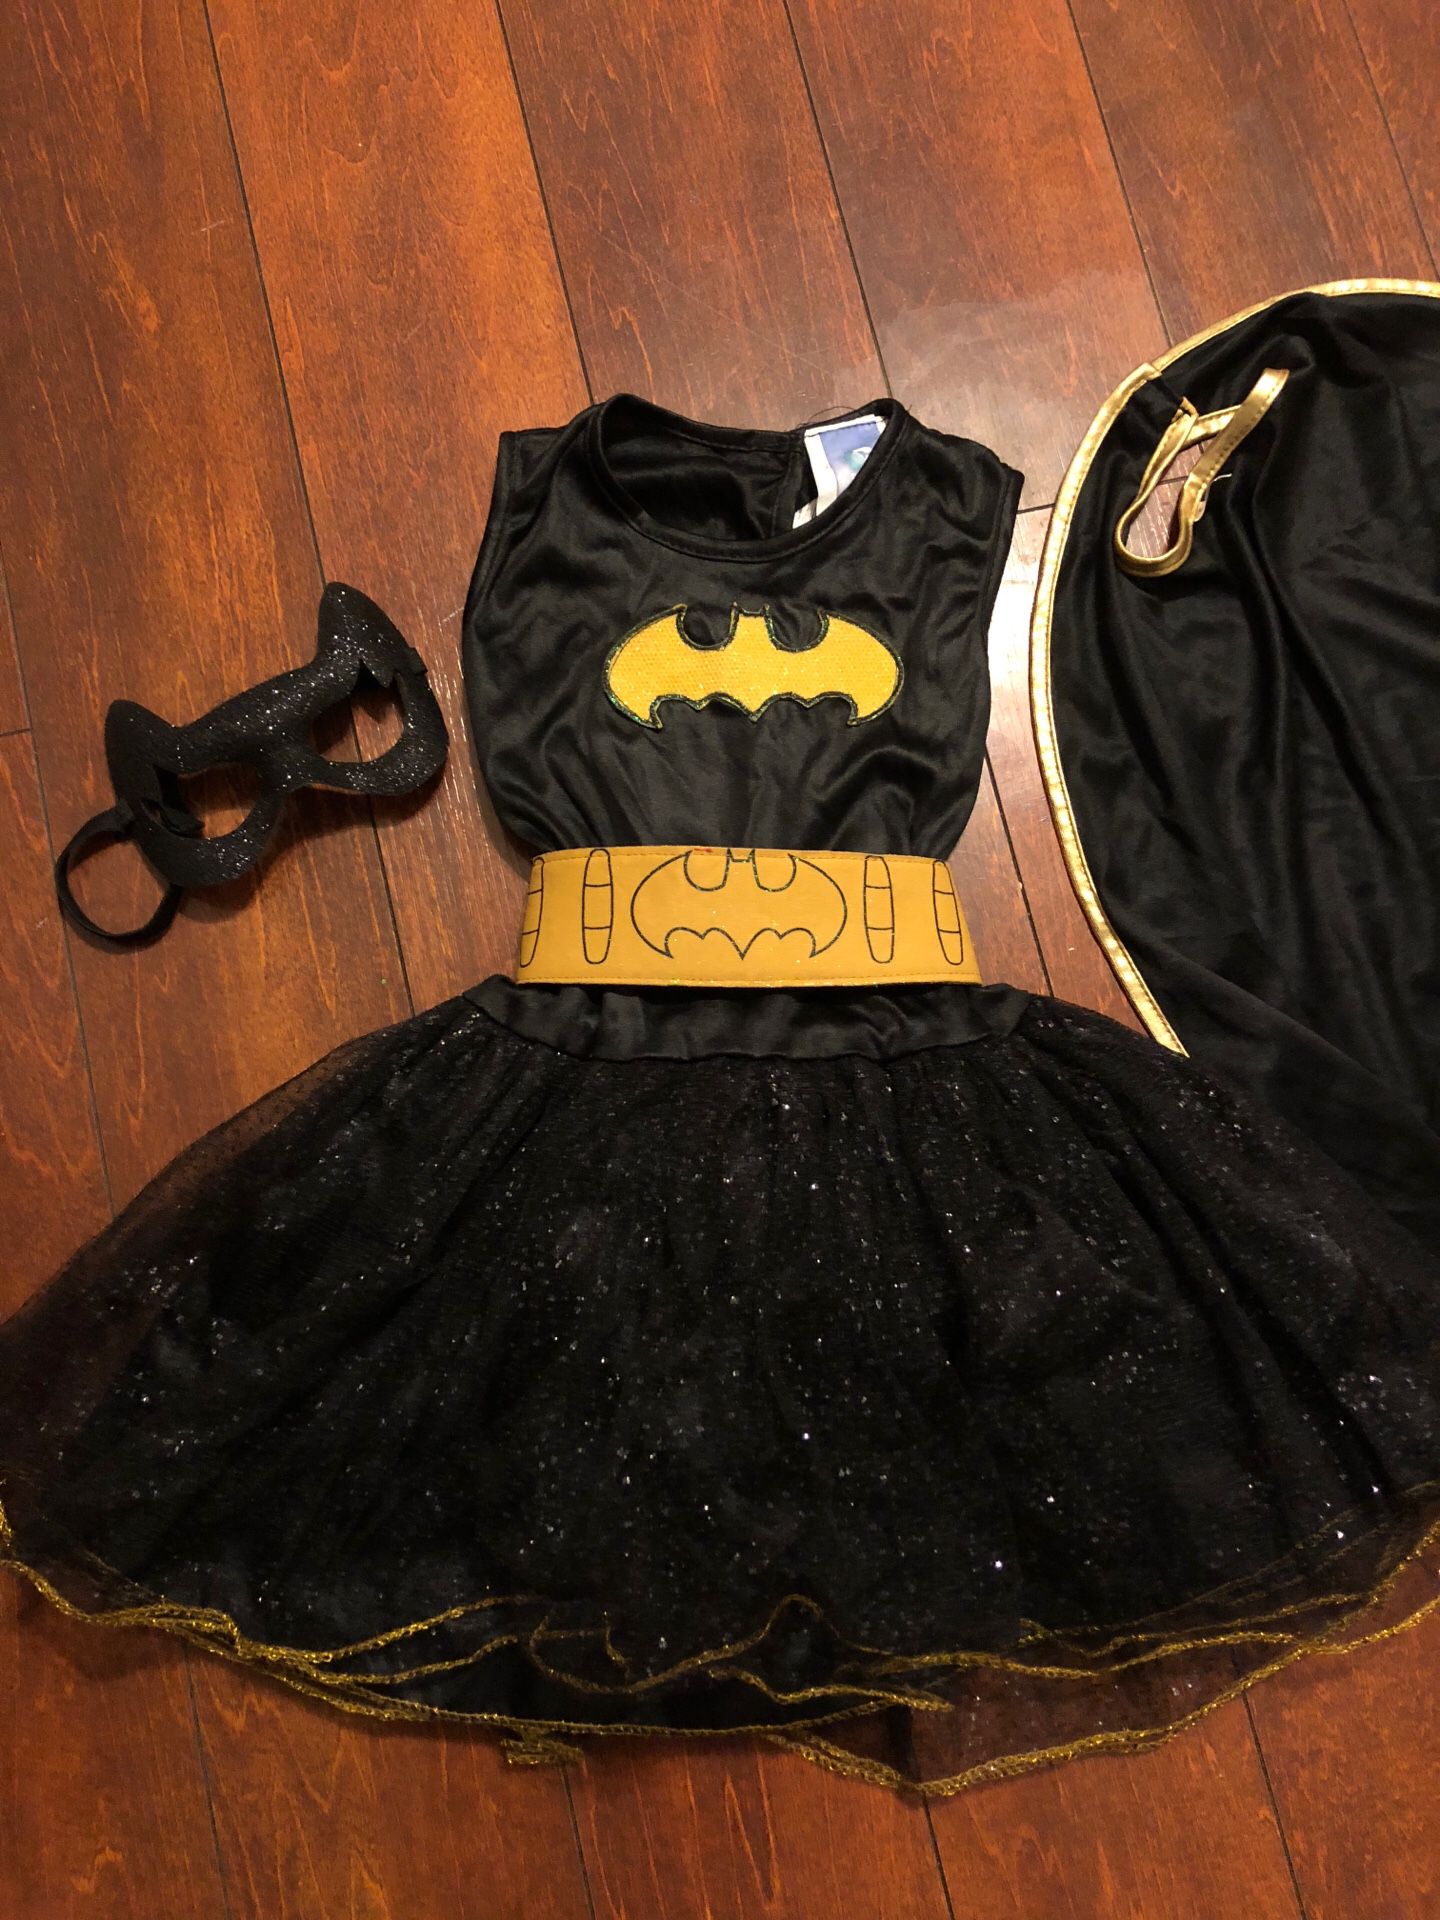 Bat girl costume size small 5/6